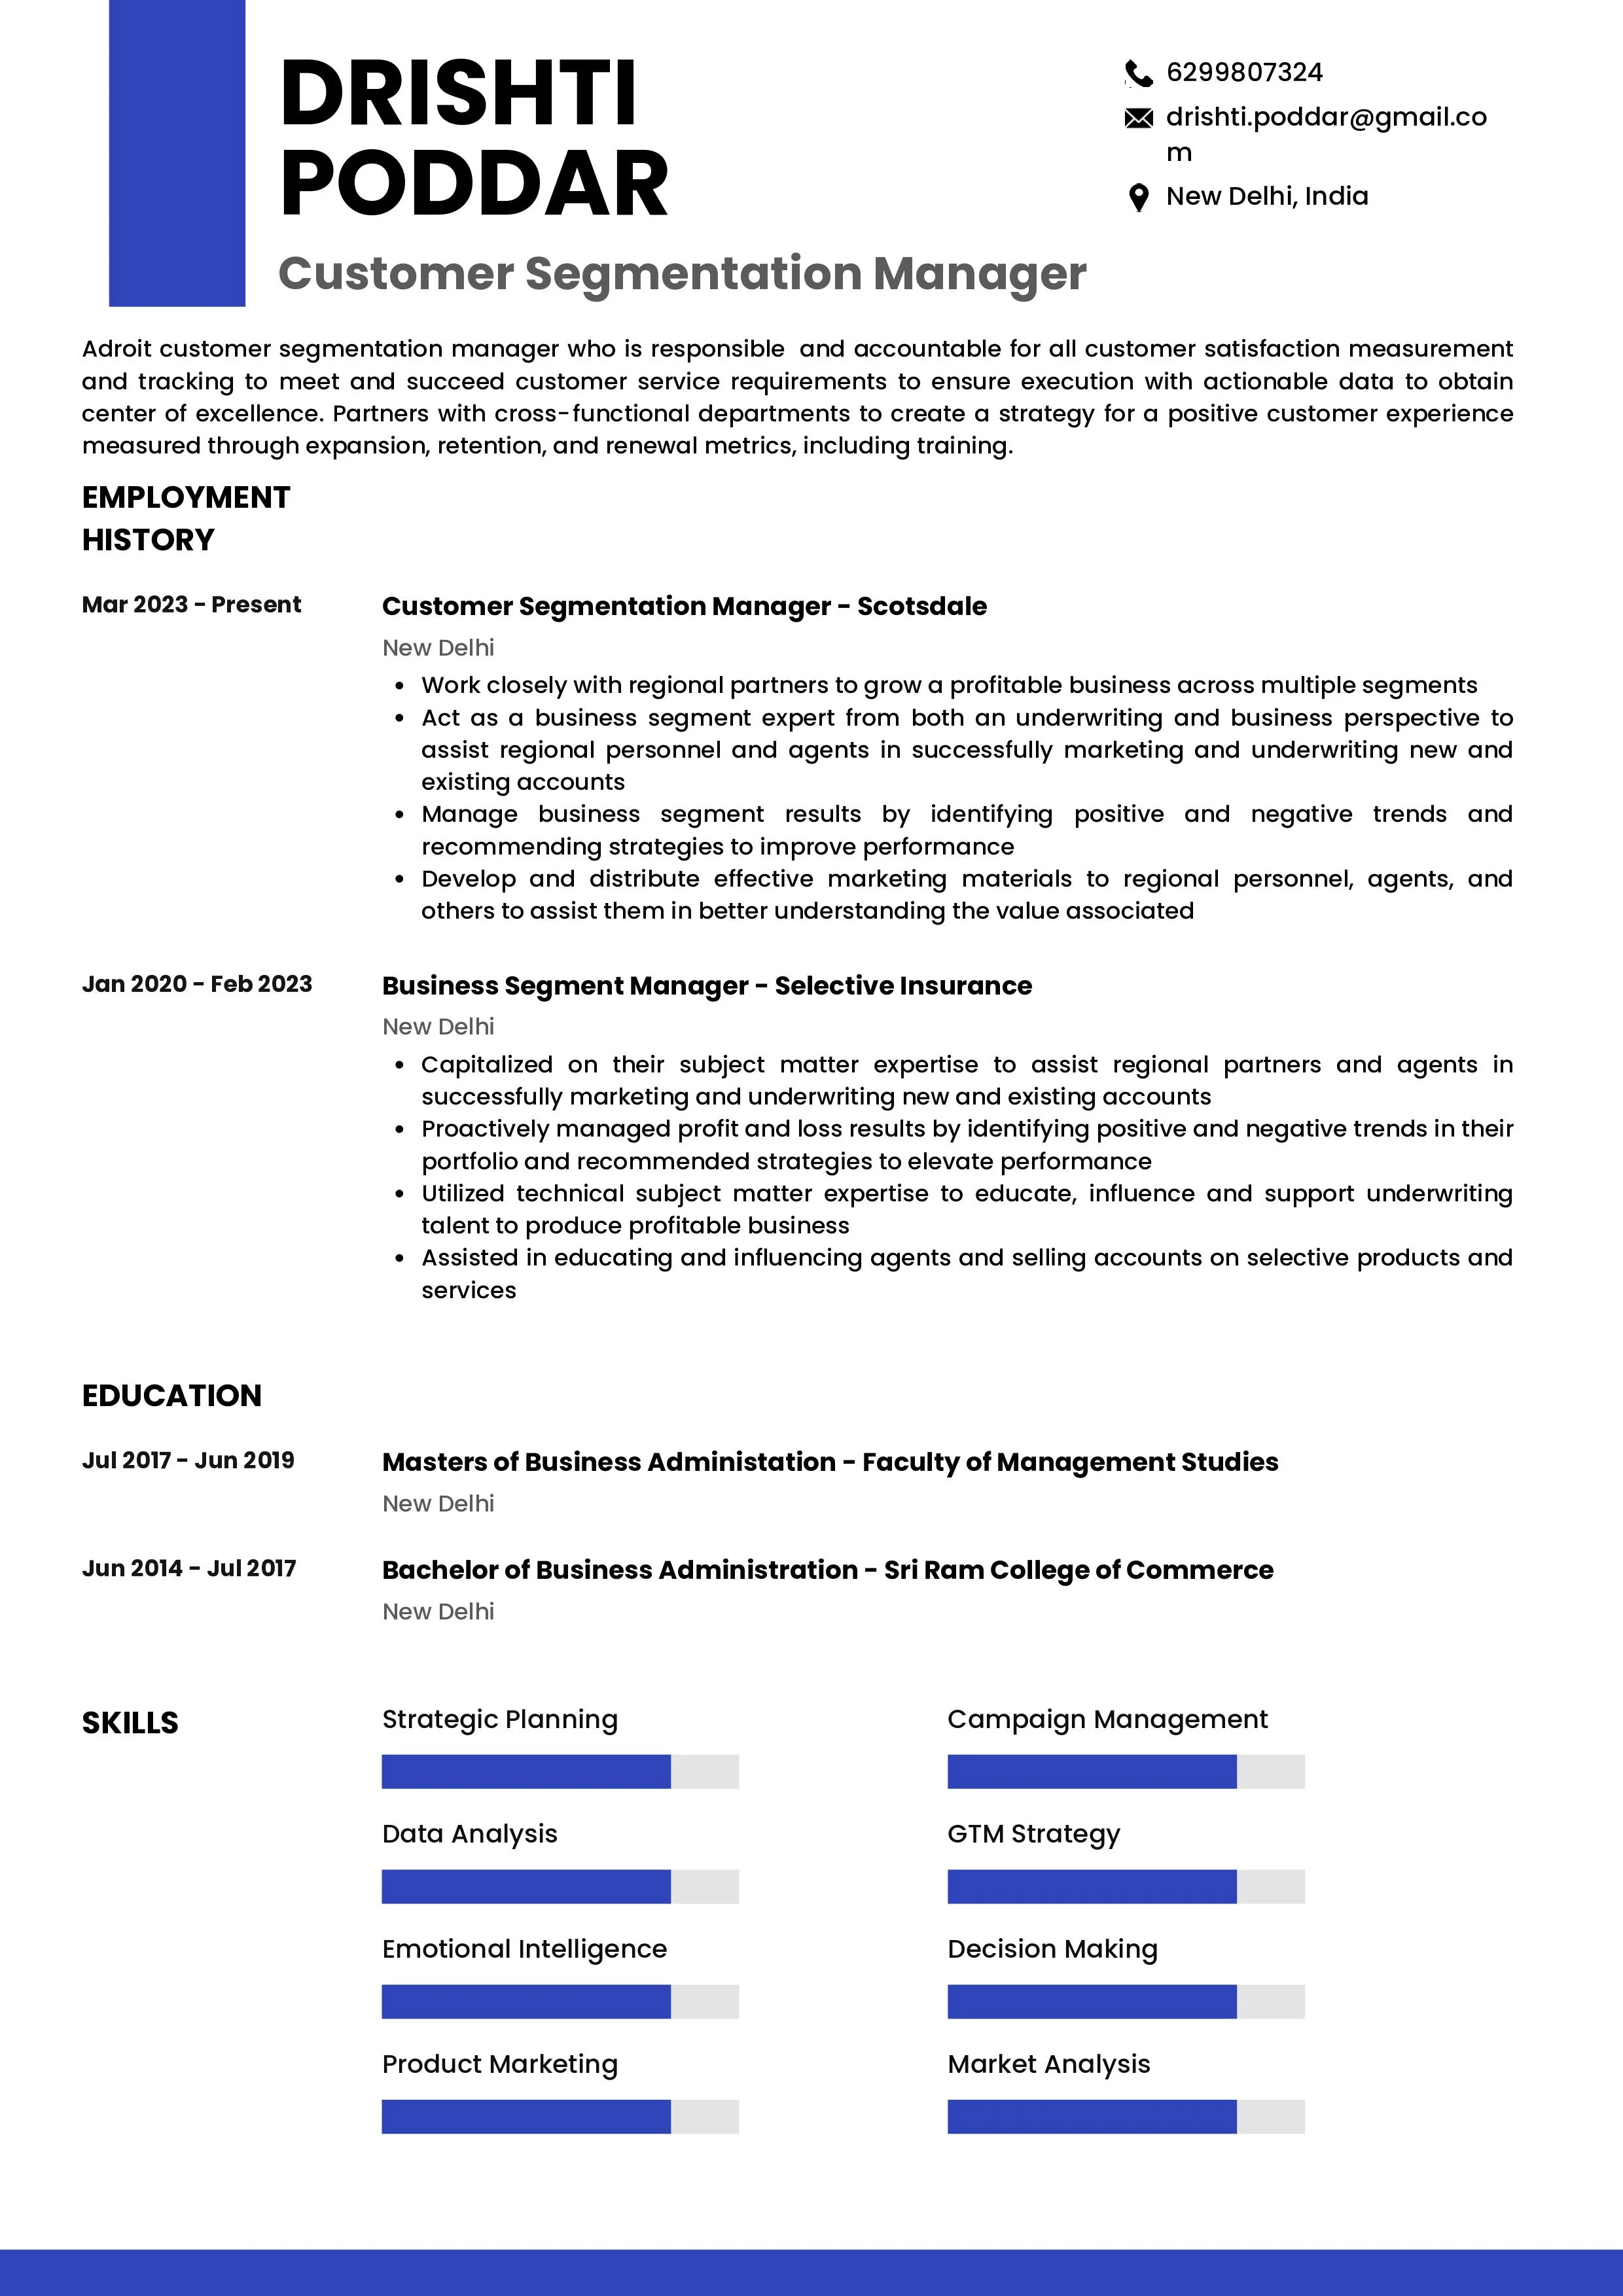 Sample Resume of Customer Segmentation Manager | Free Resume Templates & Samples on Resumod.co